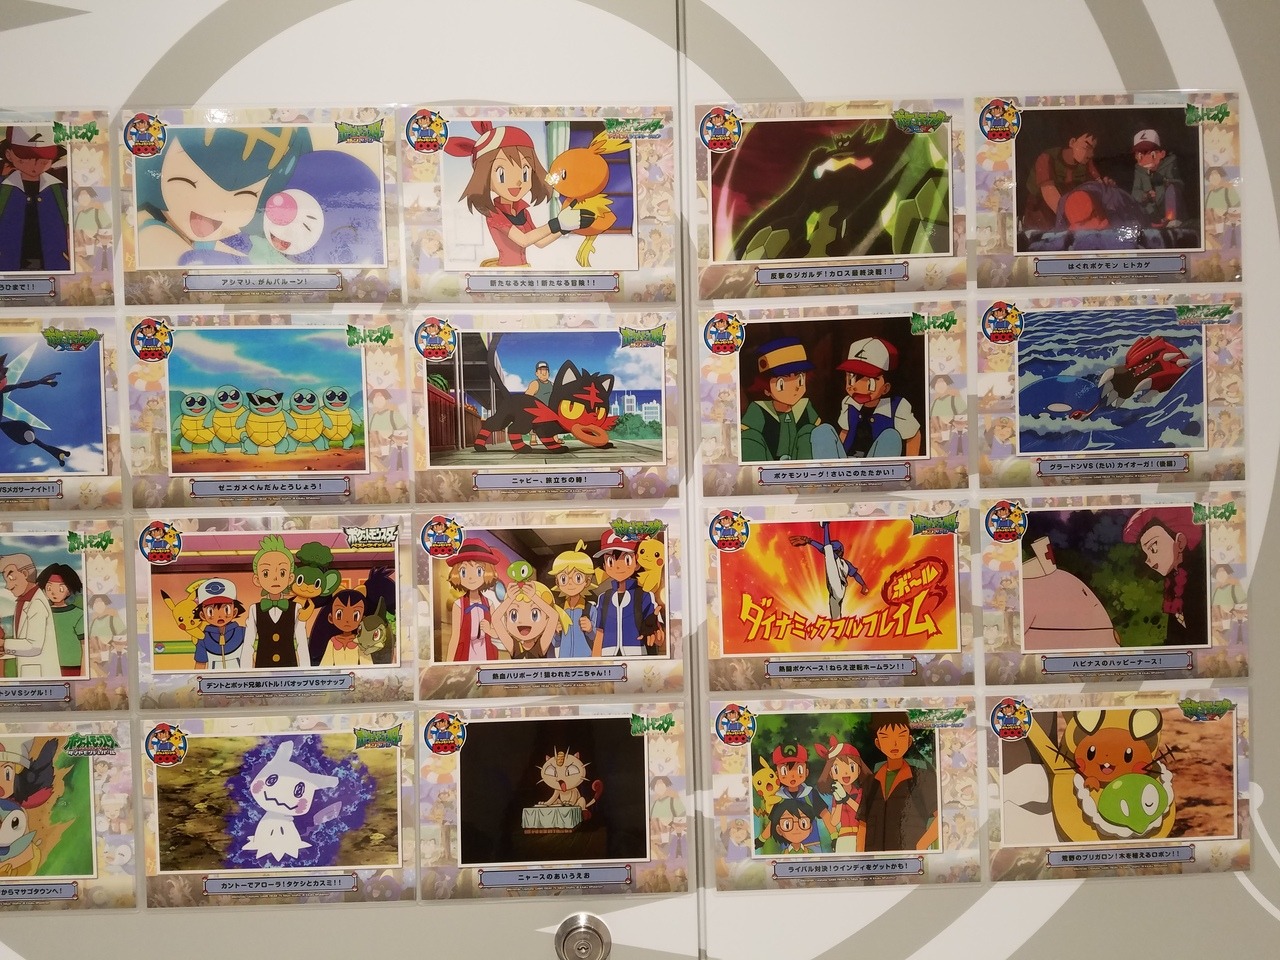 Hanty S Pokemon Collection 1000 Pokemon Episode Celebration Anime Gallery